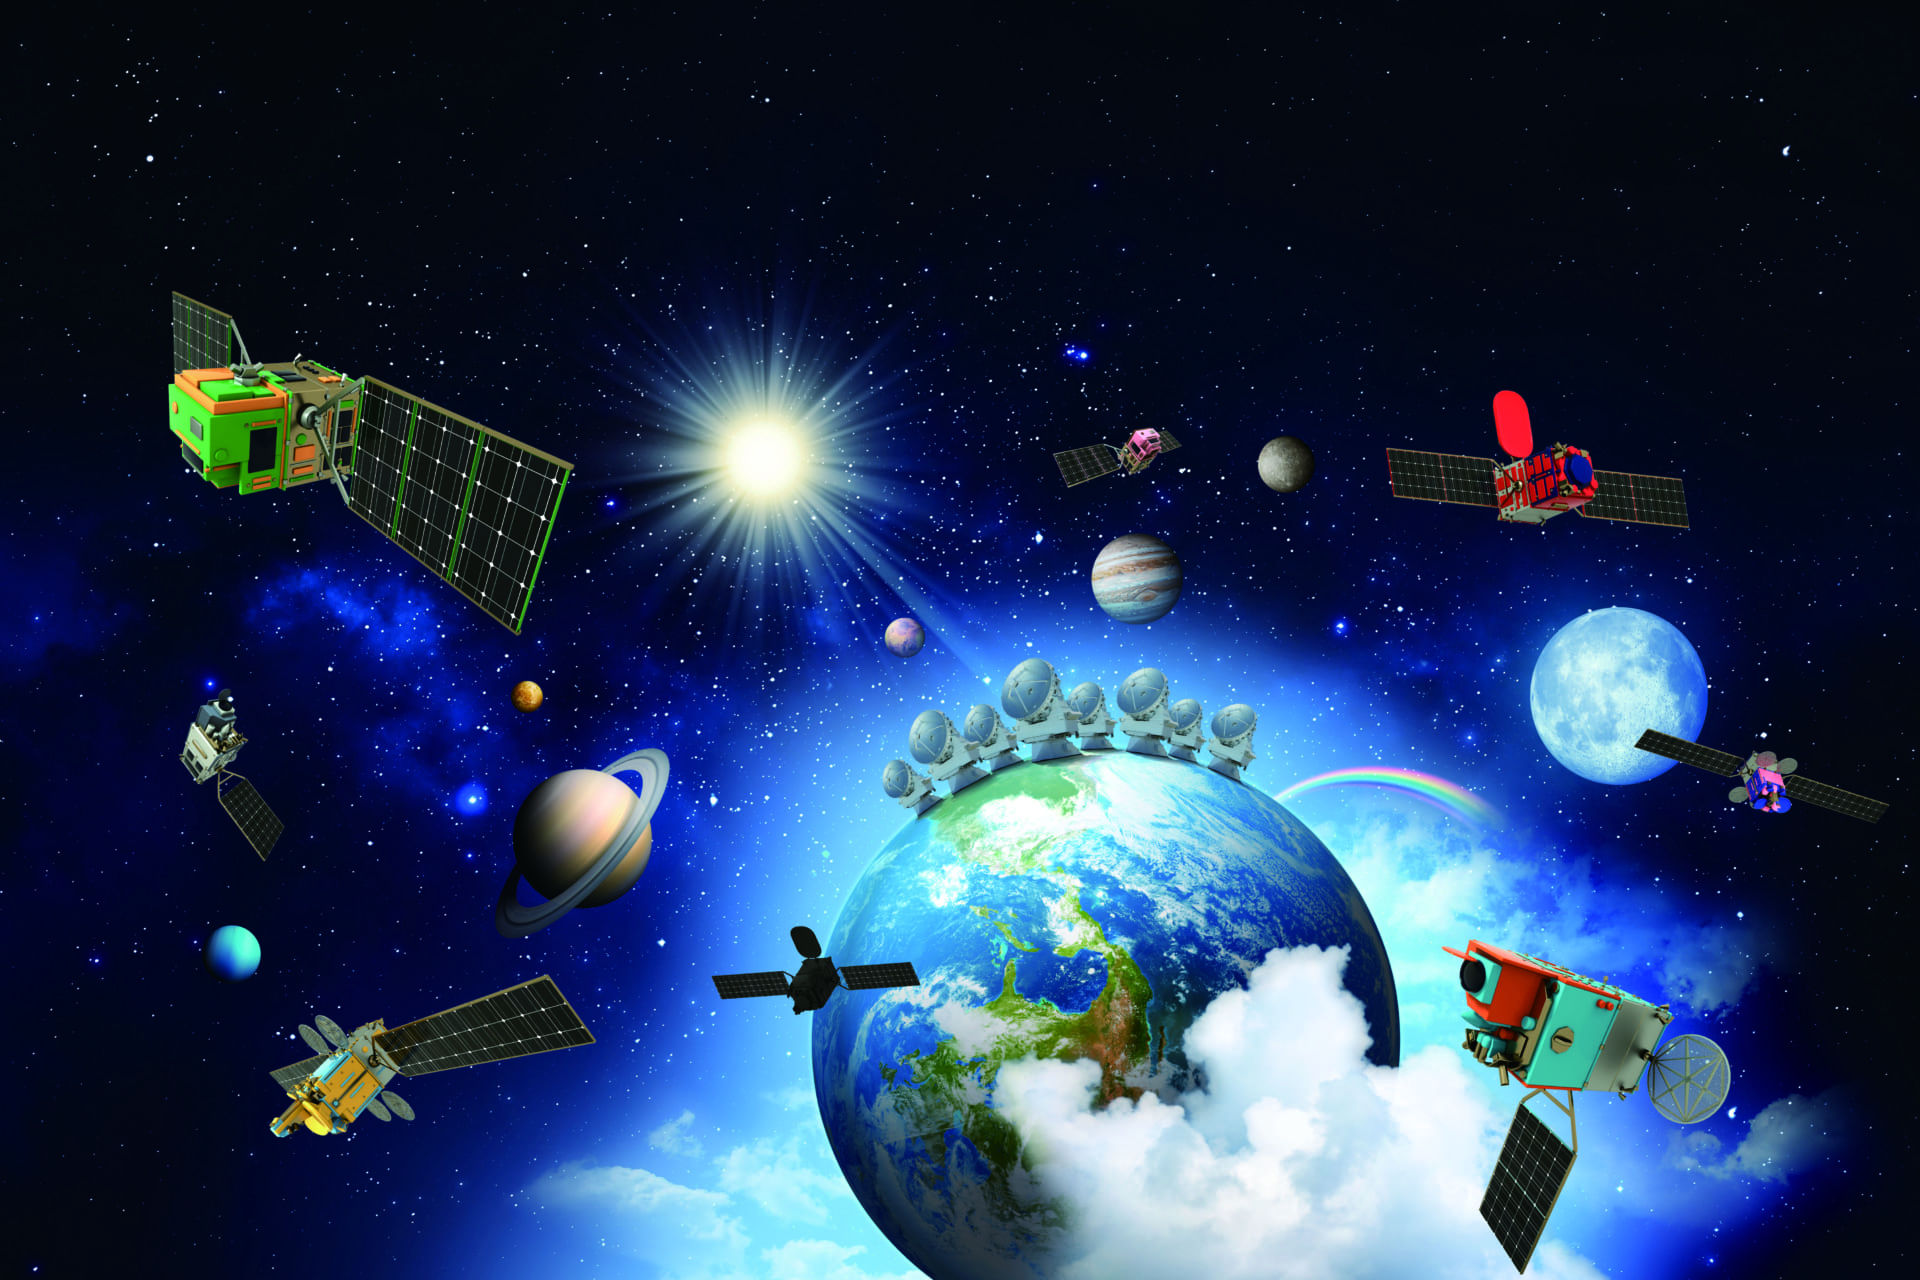 「Space Challenge in Ginza－人工衛星と大型望遠鏡で宇宙のひみつに挑む！」が開催 宇宙の魅力を東京・銀座のMEToA